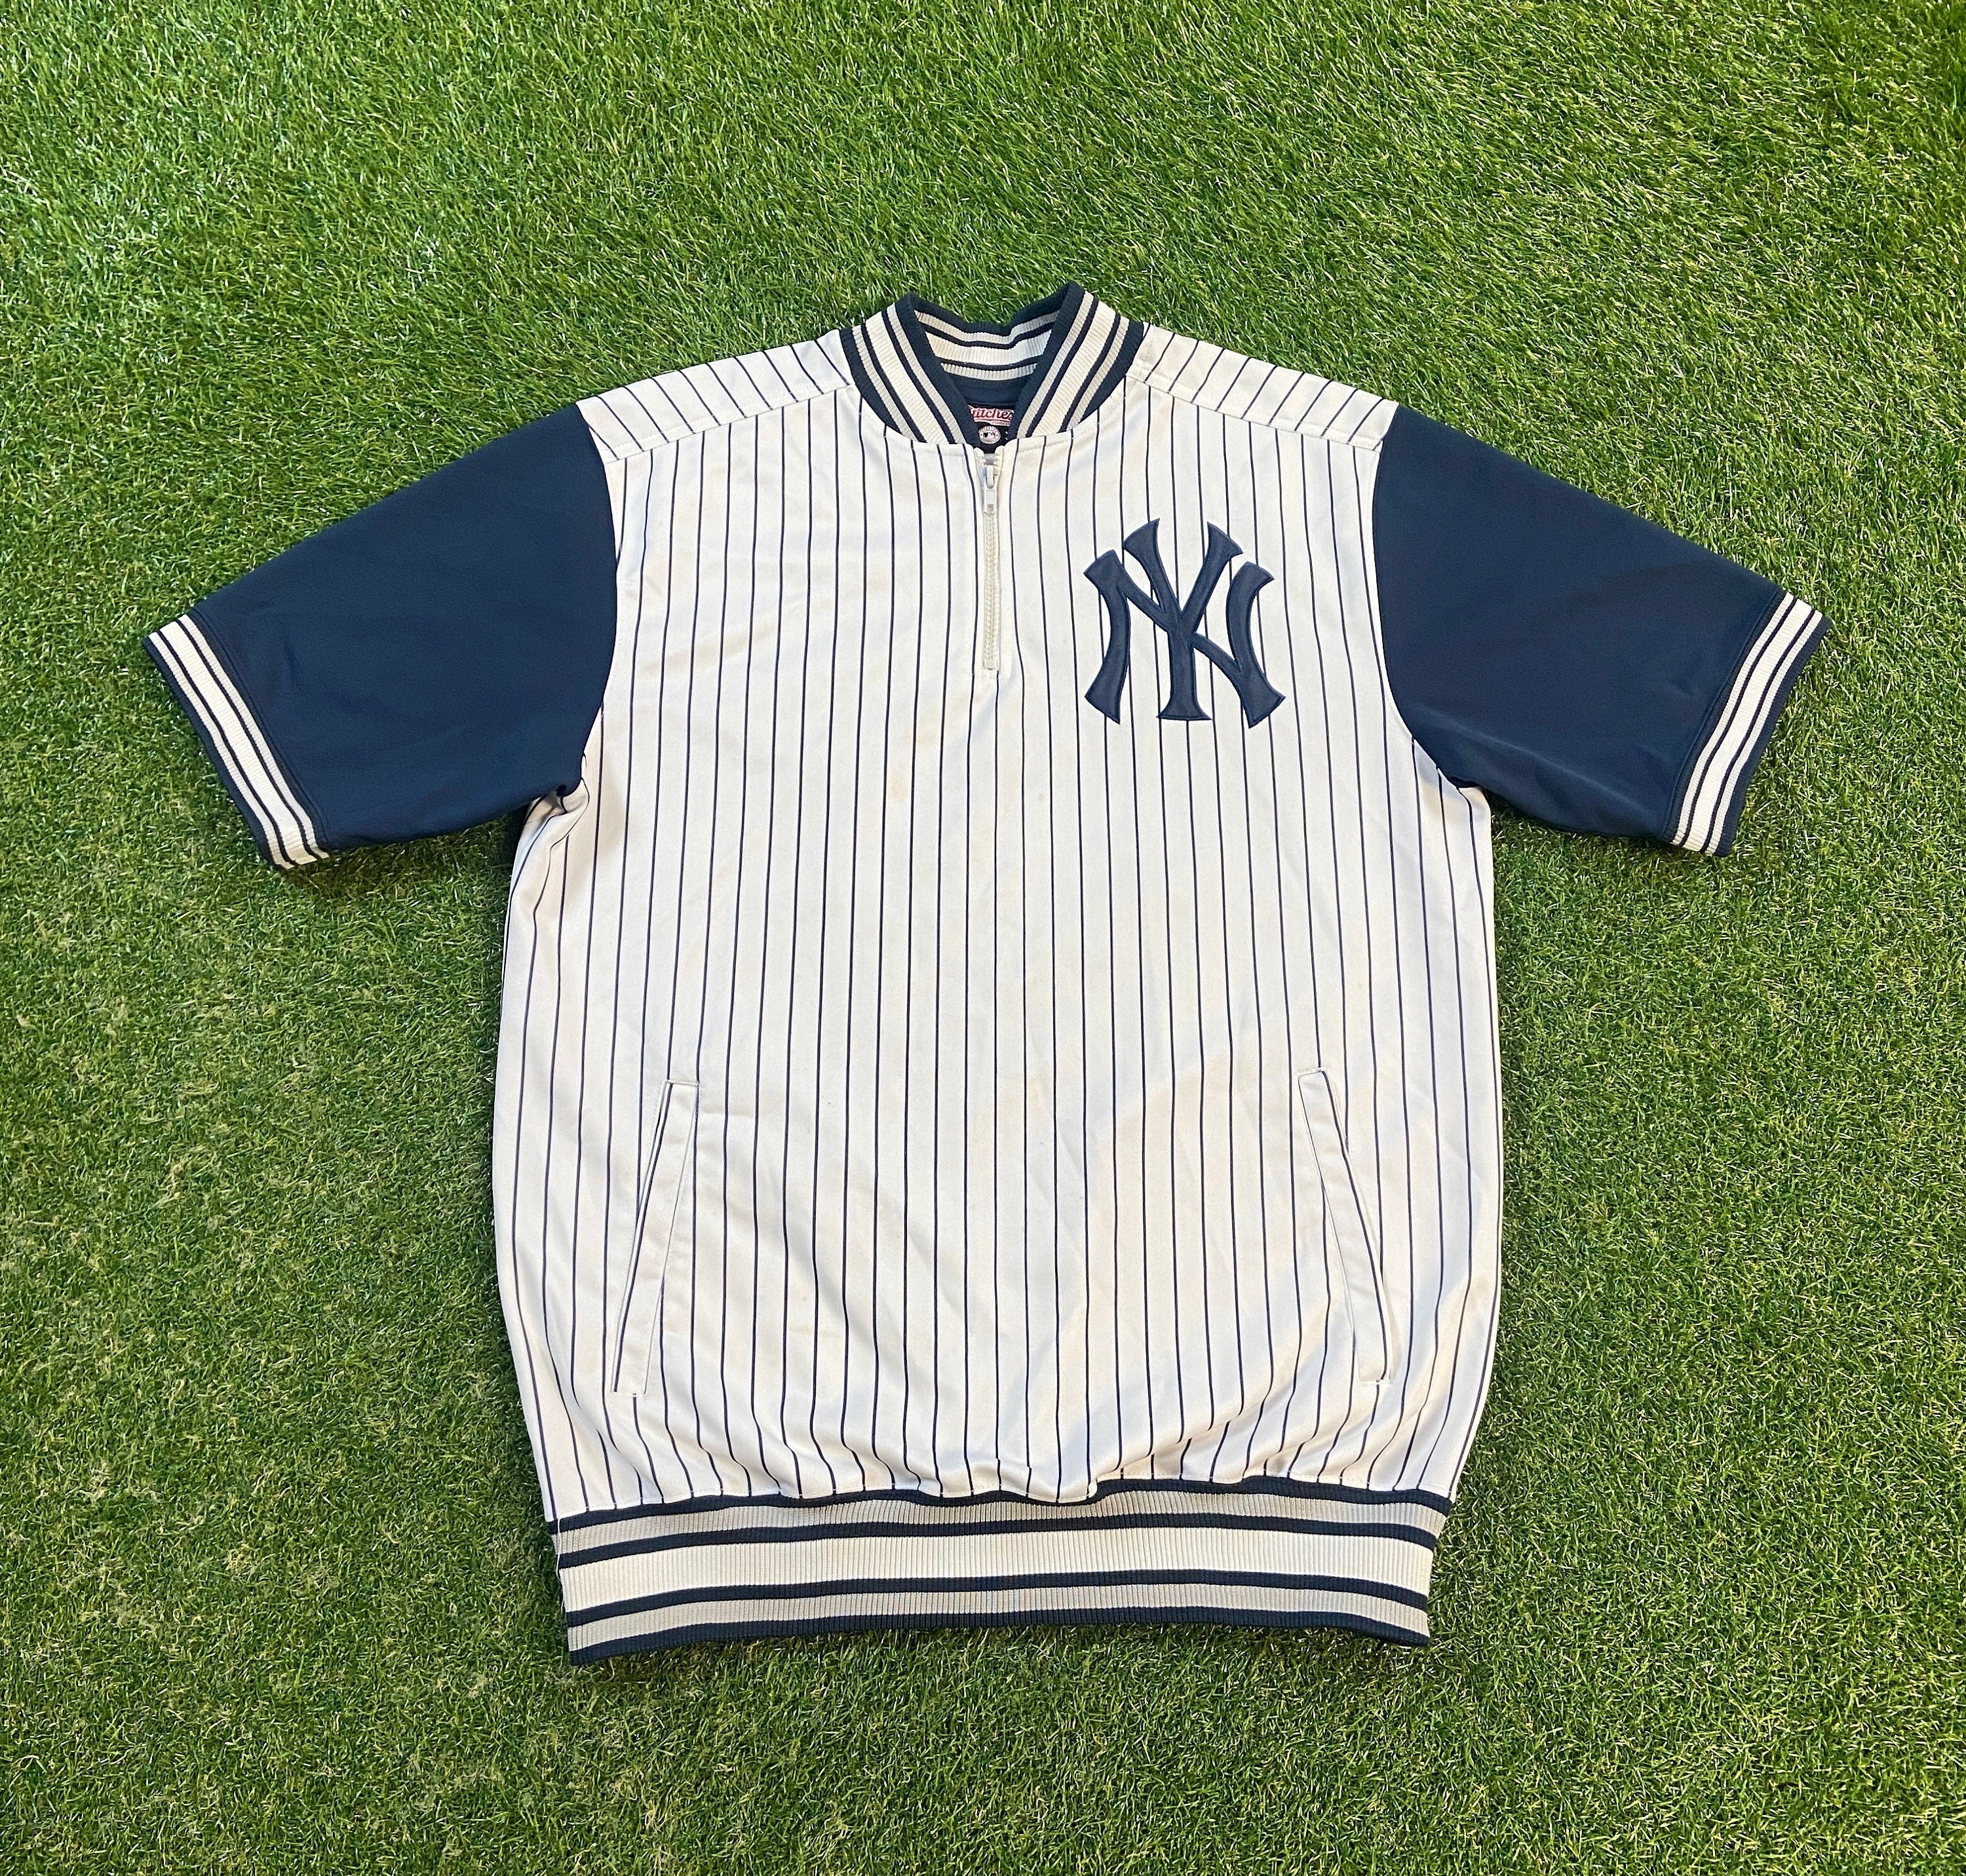 Vintage New York Yankees Pin Stripes Baseball Jersey Stitches Size Large L MLB Baseball American League Bronx Original 1990s 90s